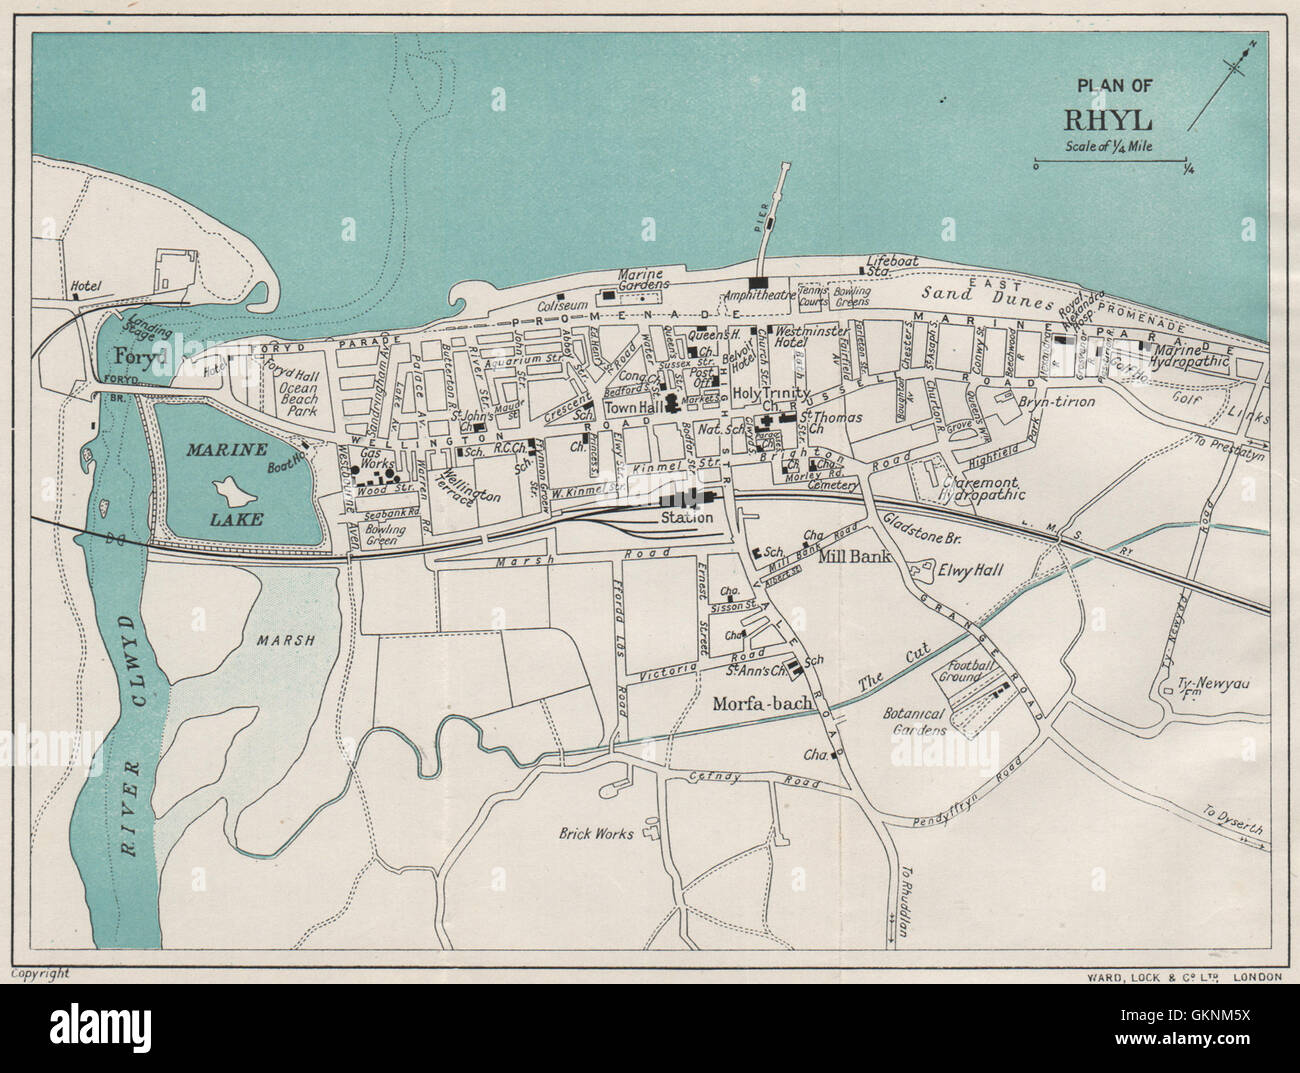 RHYL vintage town/city plan. Wales. WARD LOCK, 1925 vintage map Stock ...